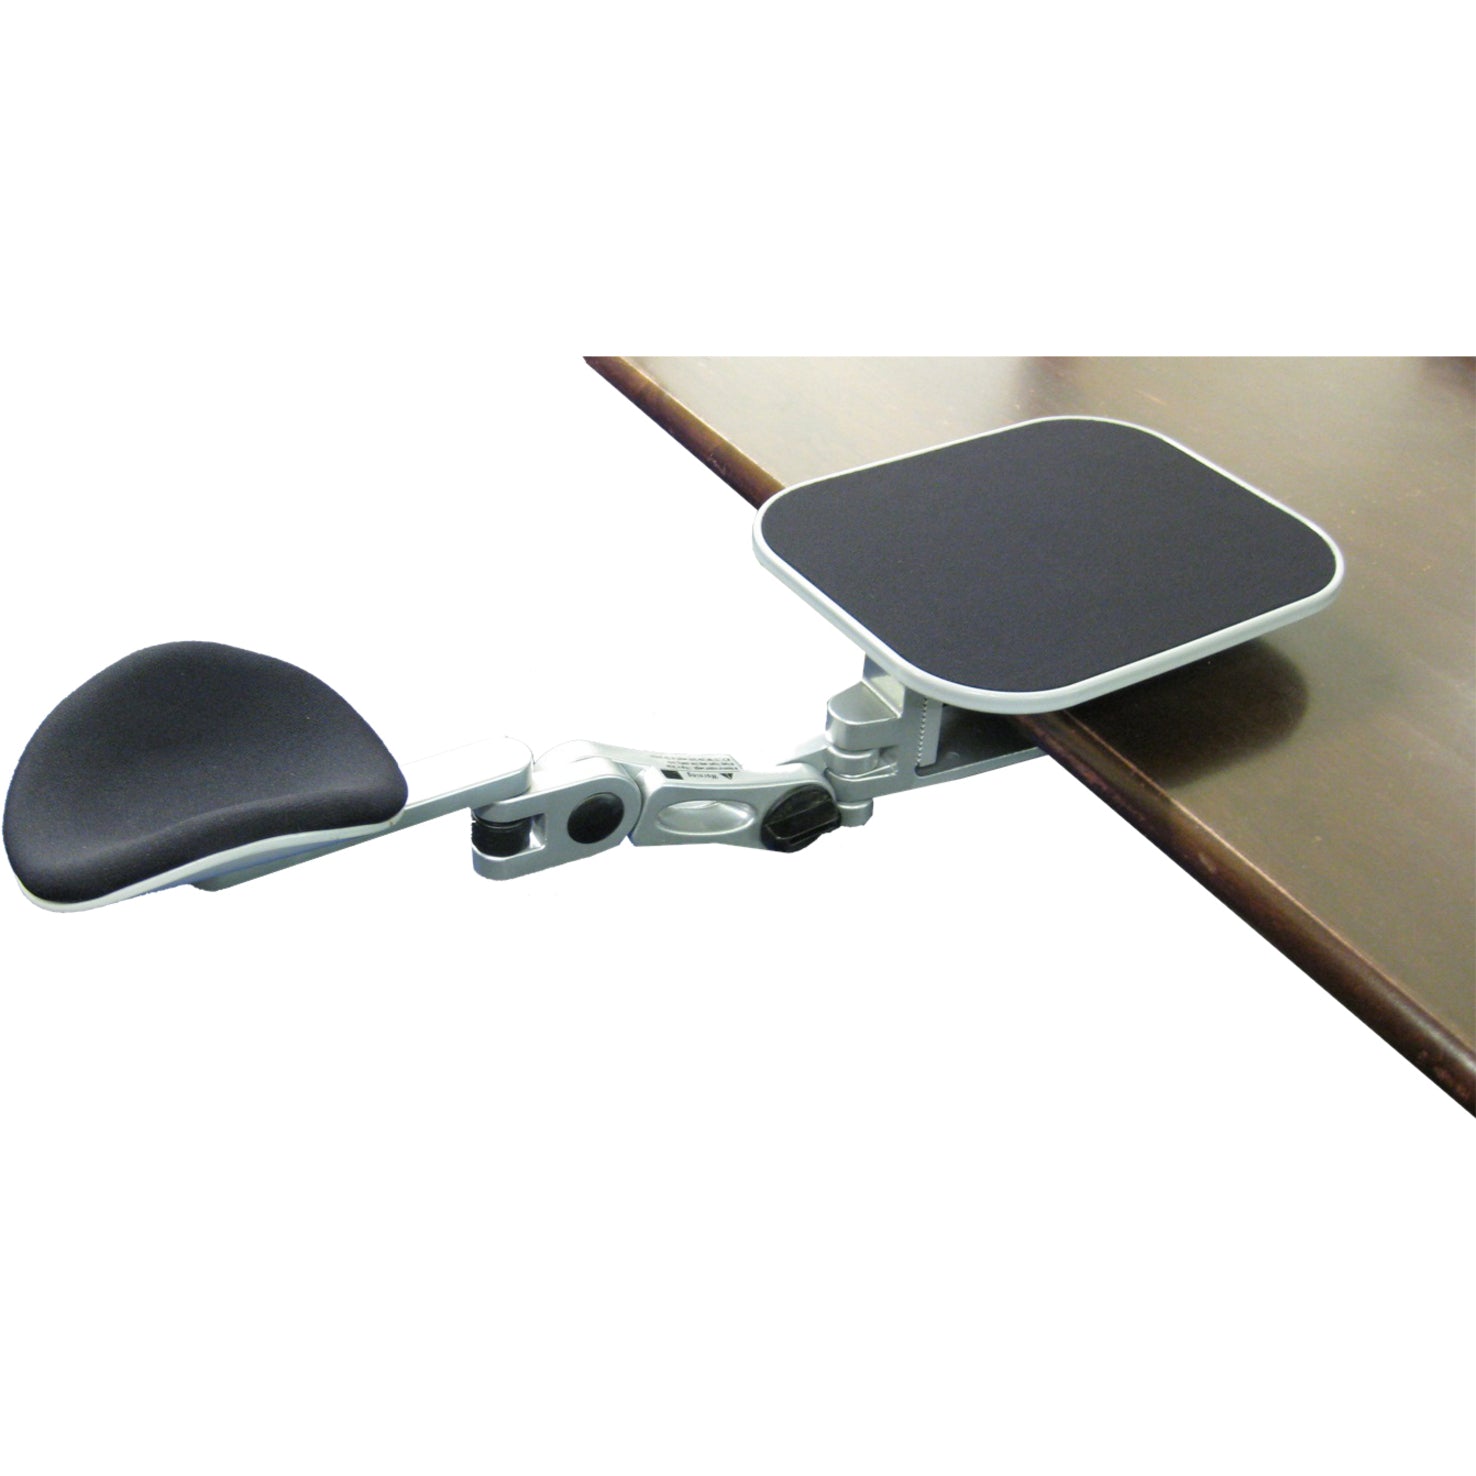 Ergoguys EG-ErgoArm Ergonomic Adjustable Computer Arm Rest with Mouse Pad, Silver Aluminum, Durable and Comfortable Armrest